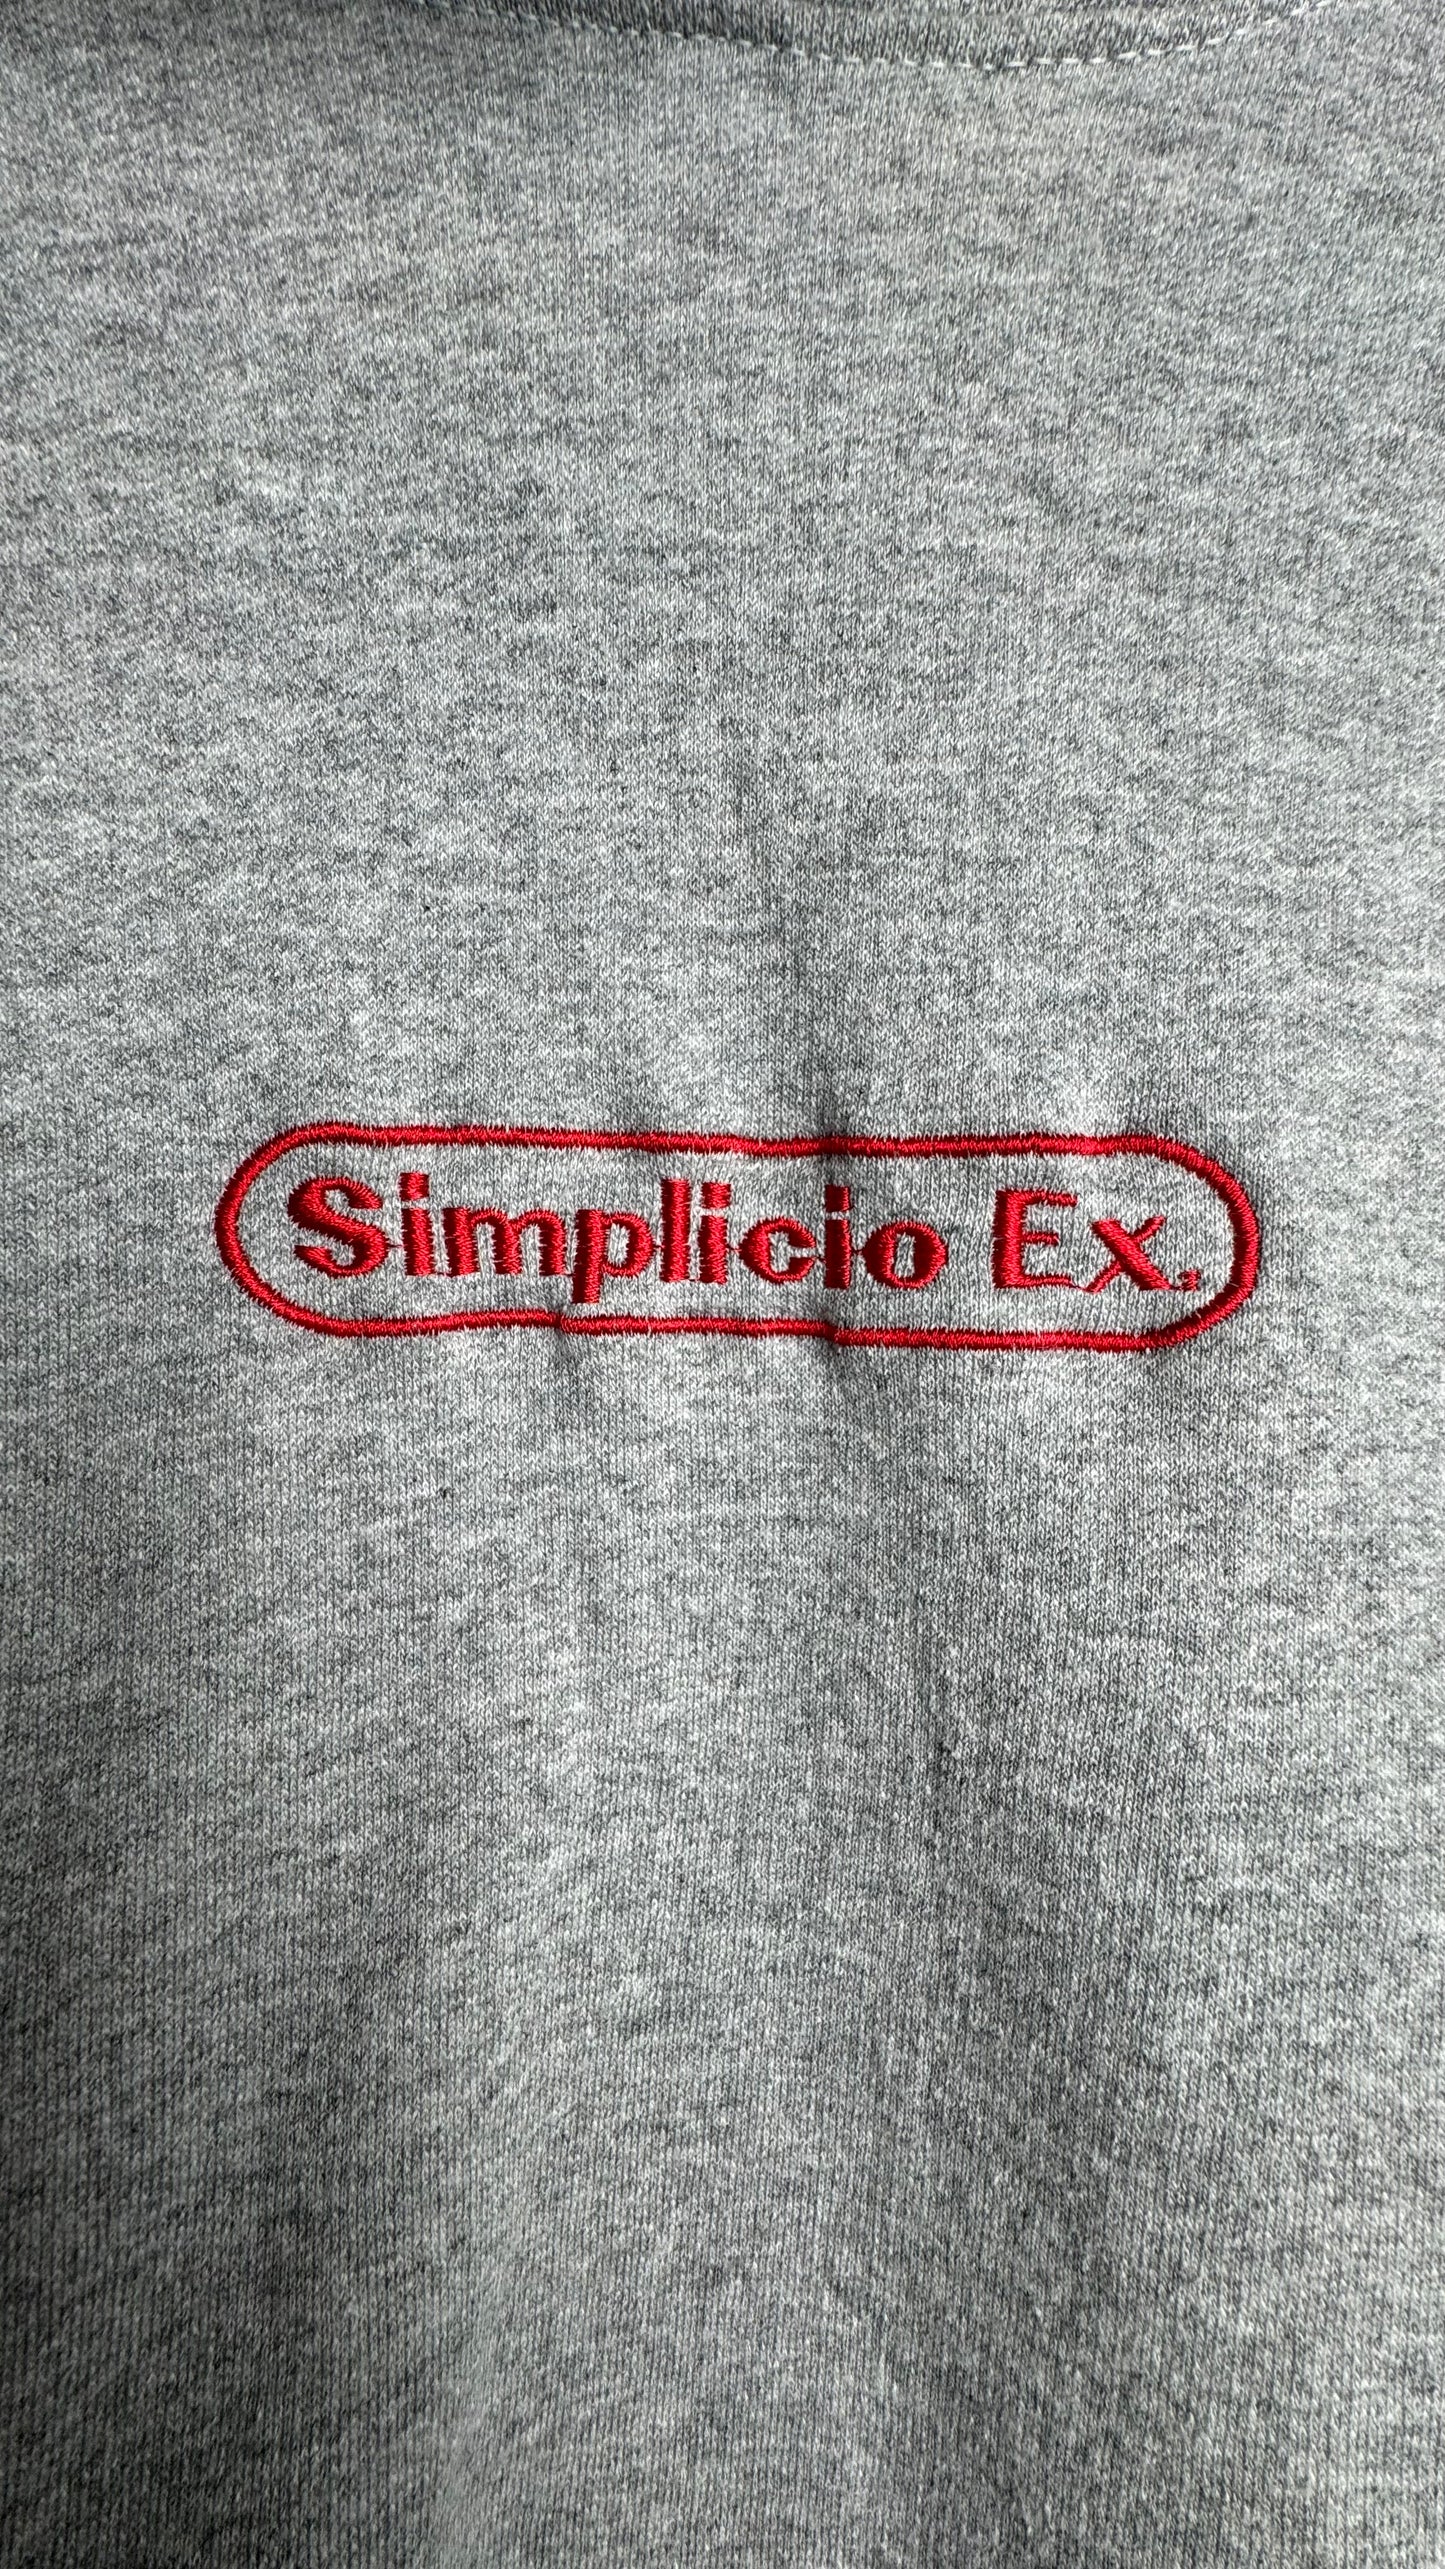 Simplicio Ex. Embroidered nintendo logo MADE TO ORDER